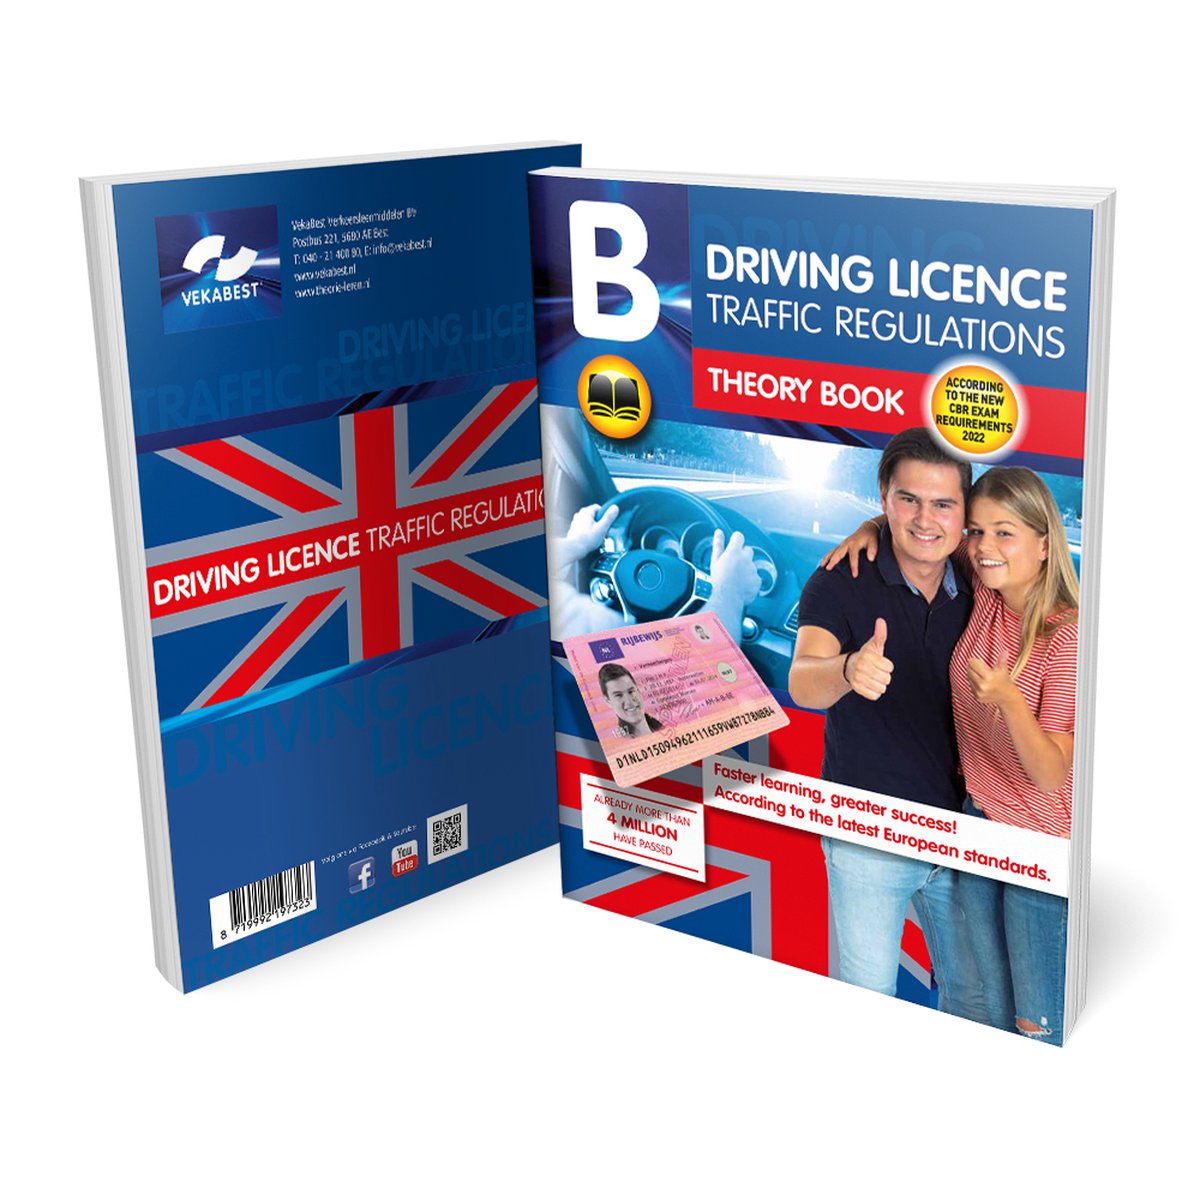 AutoTheorieboek Engels 2022 (English) - Car Theory Book Driving License B